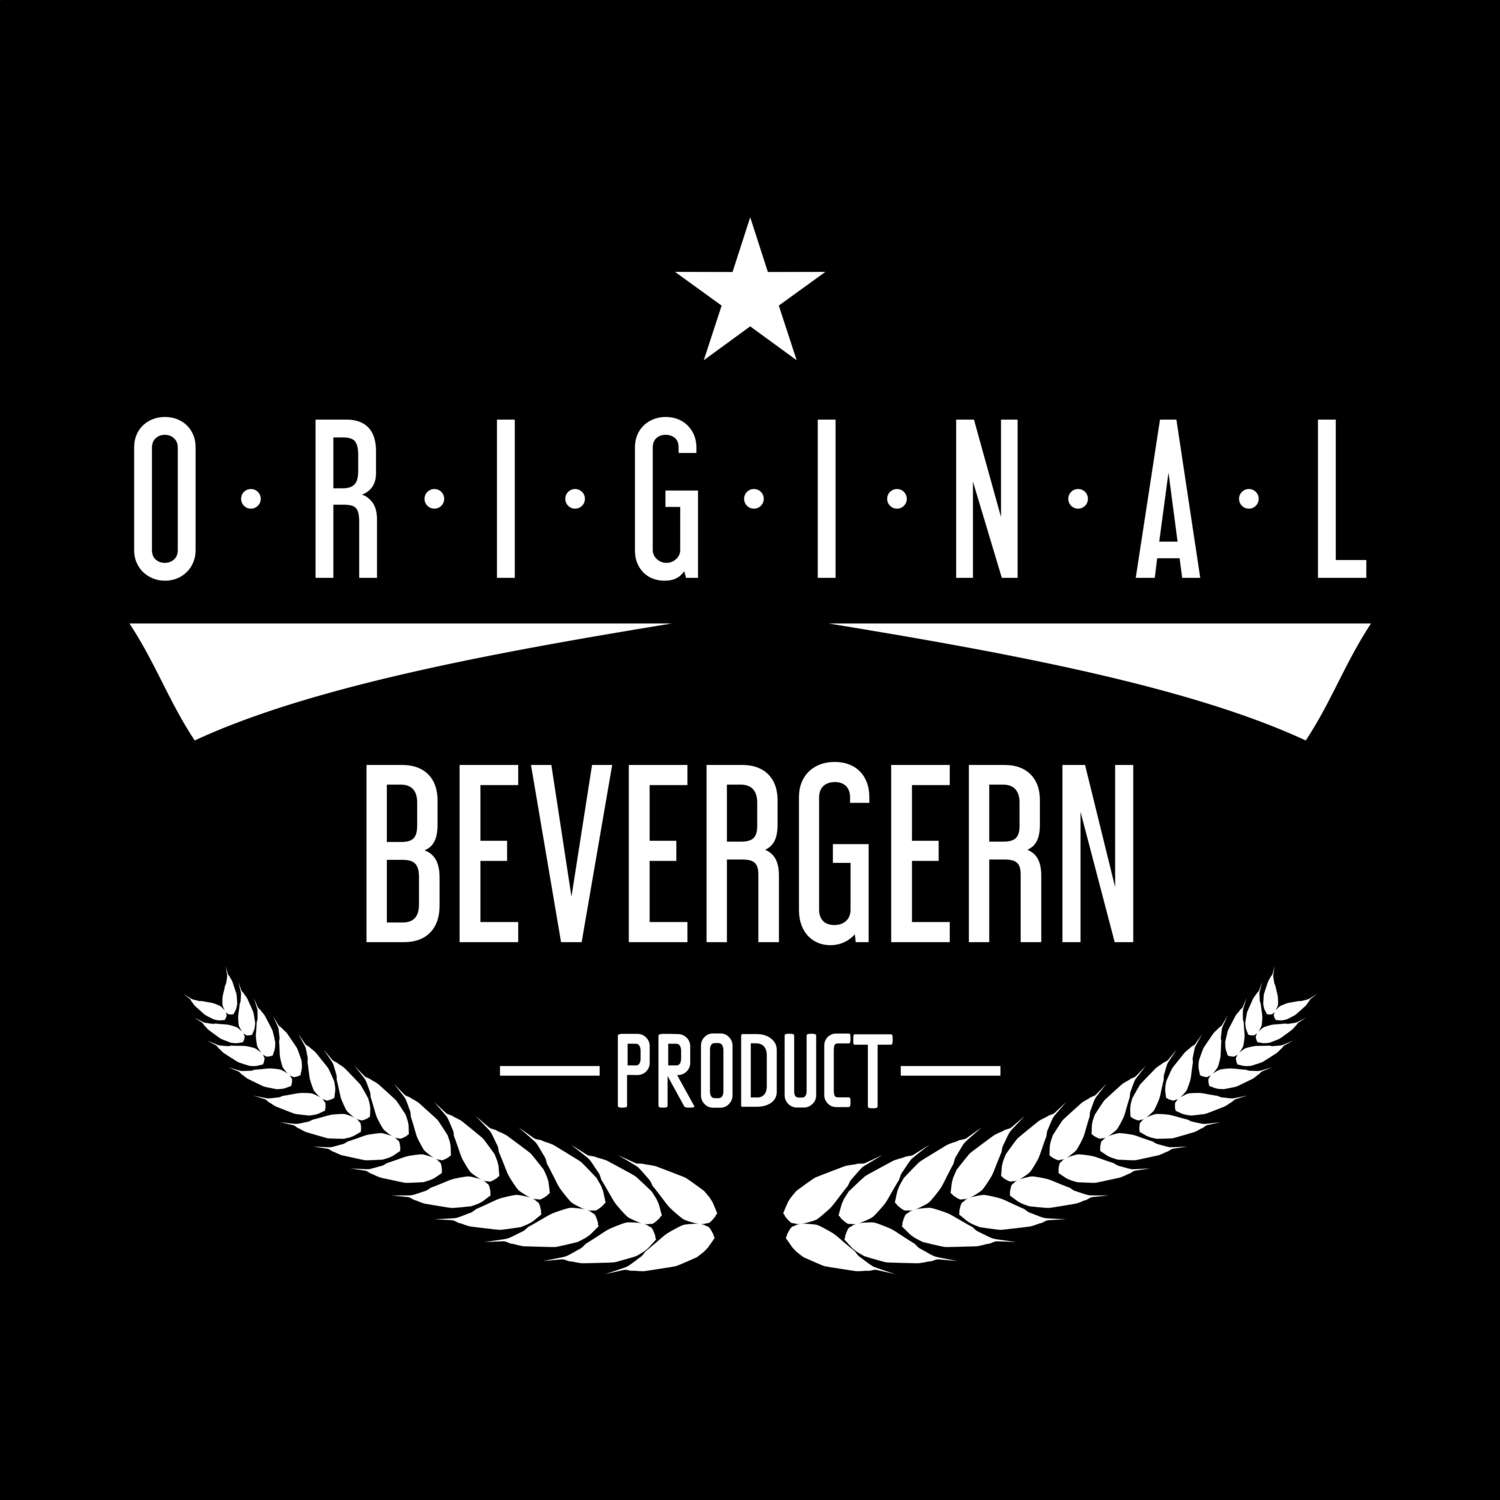 Bevergern T-Shirt »Original Product«